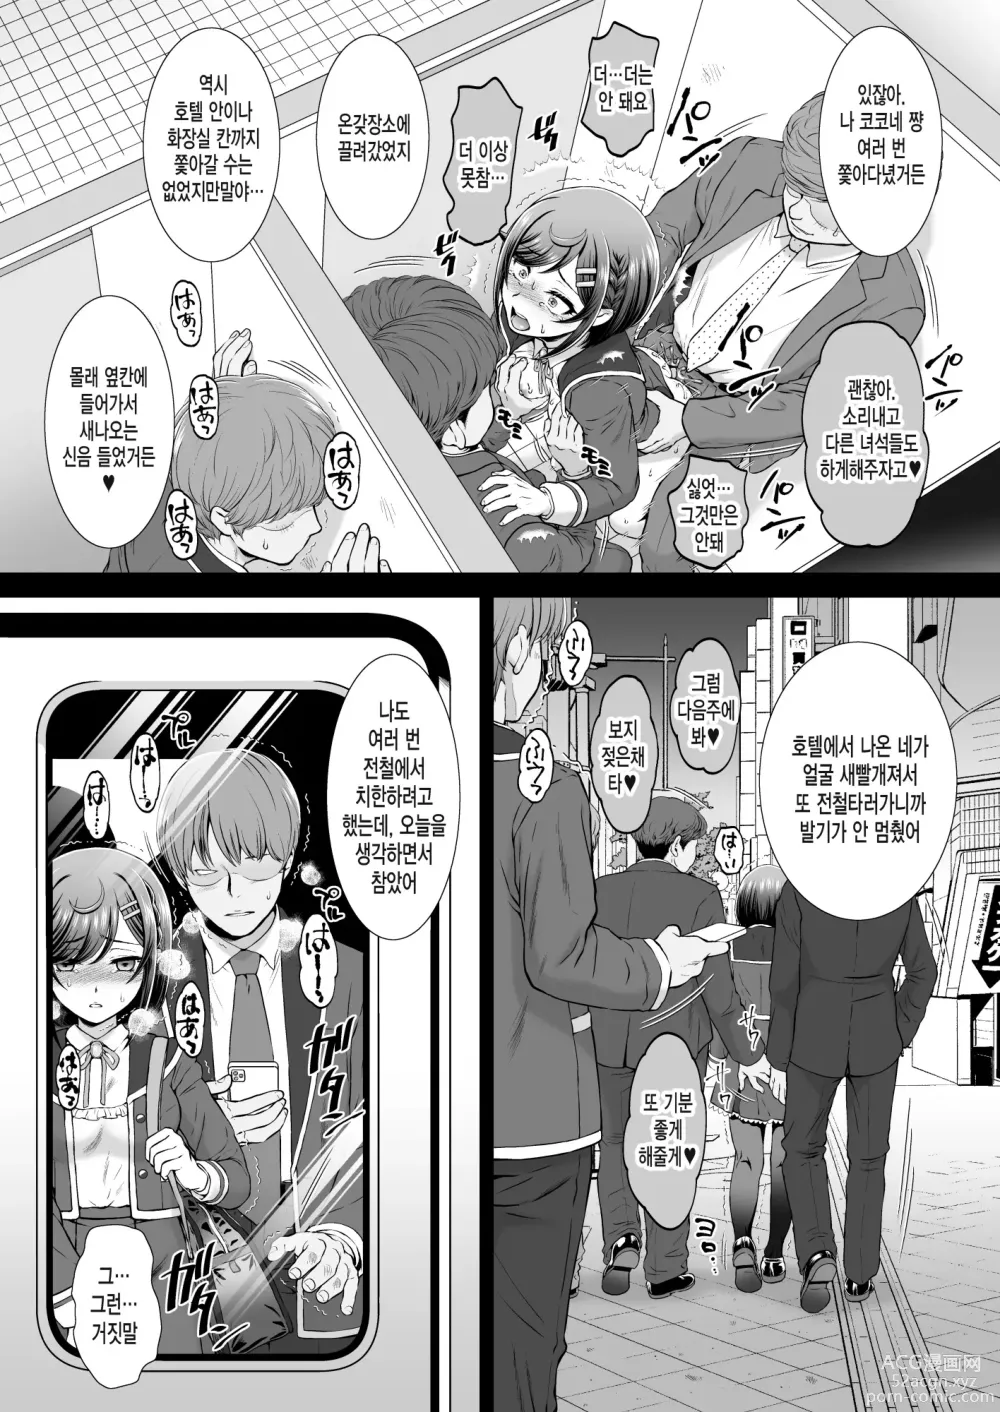 Page 23 of doujinshi 코코네 쨩 애프터